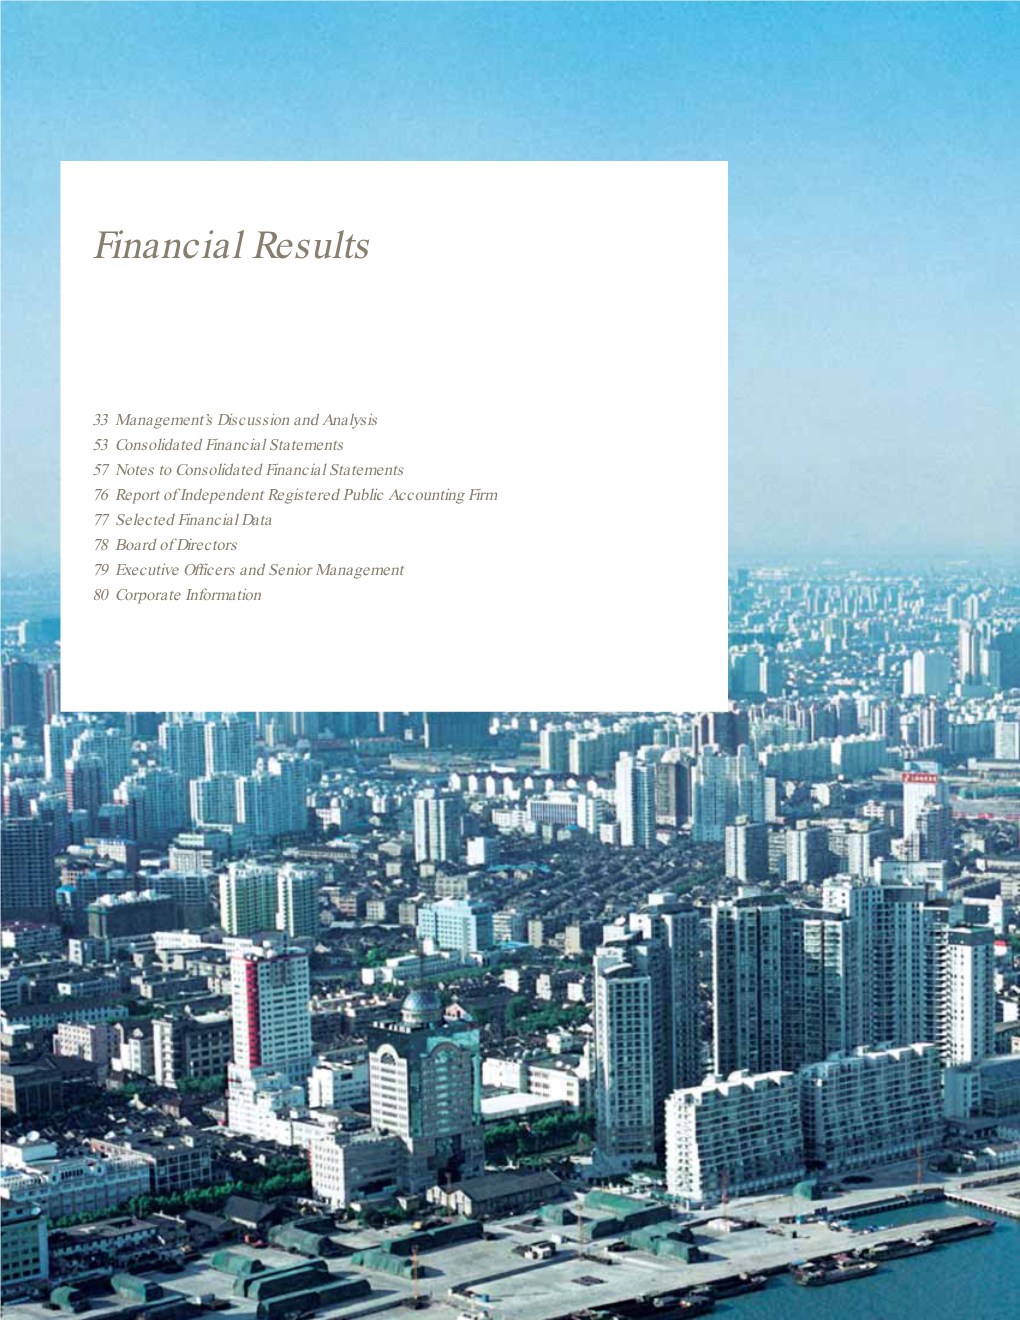 Download Fedex Corp. Annual Report 2004 Financials